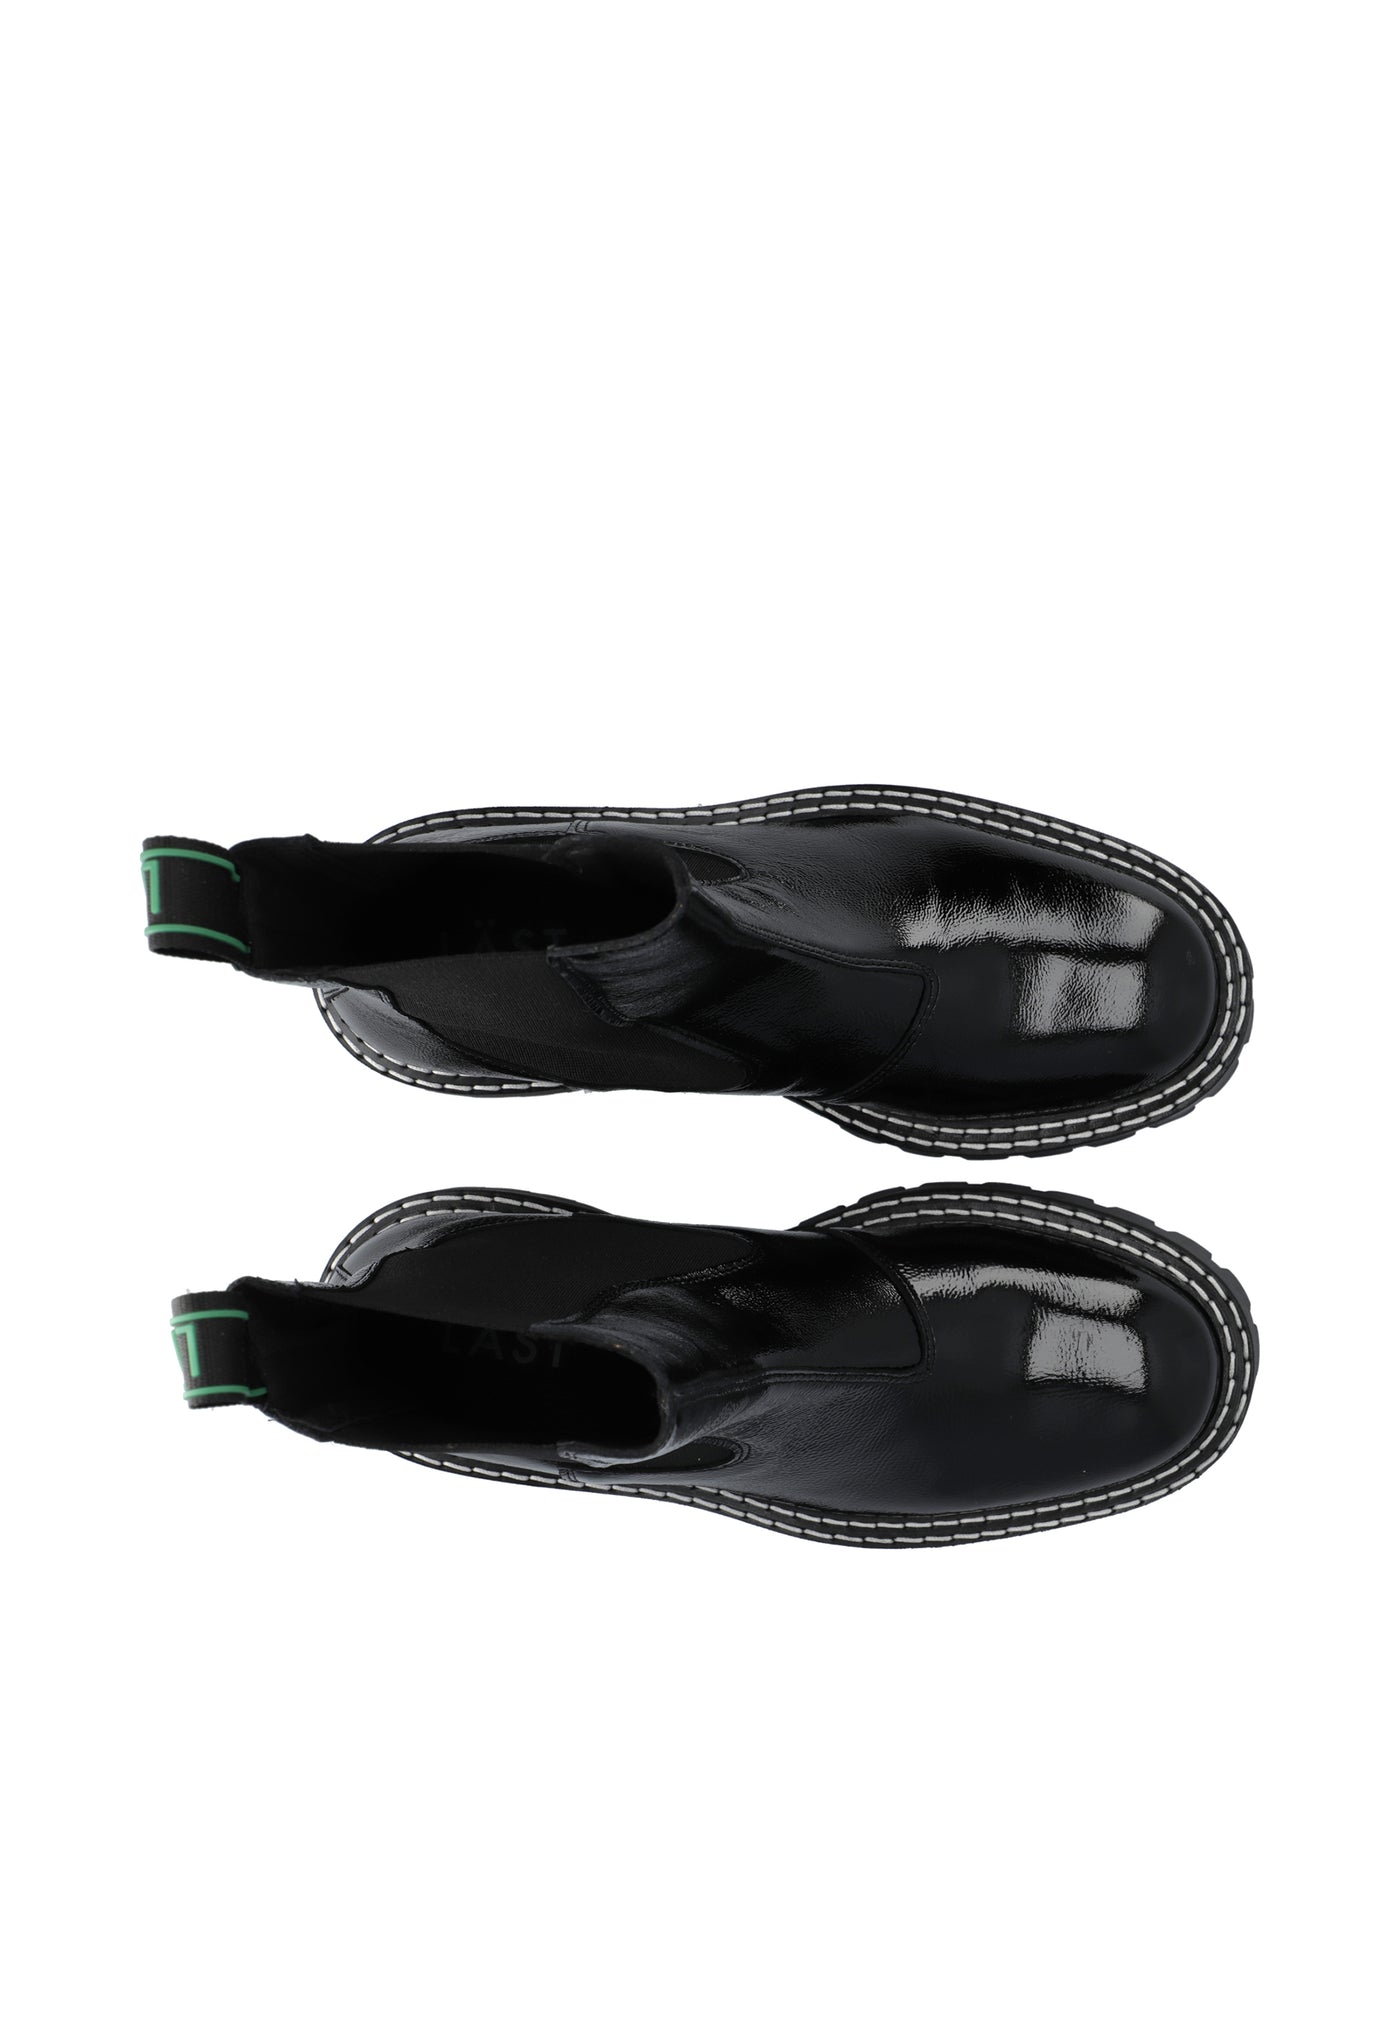 LÄST Demmi - Patent Leather - Black Ankle Boots Black